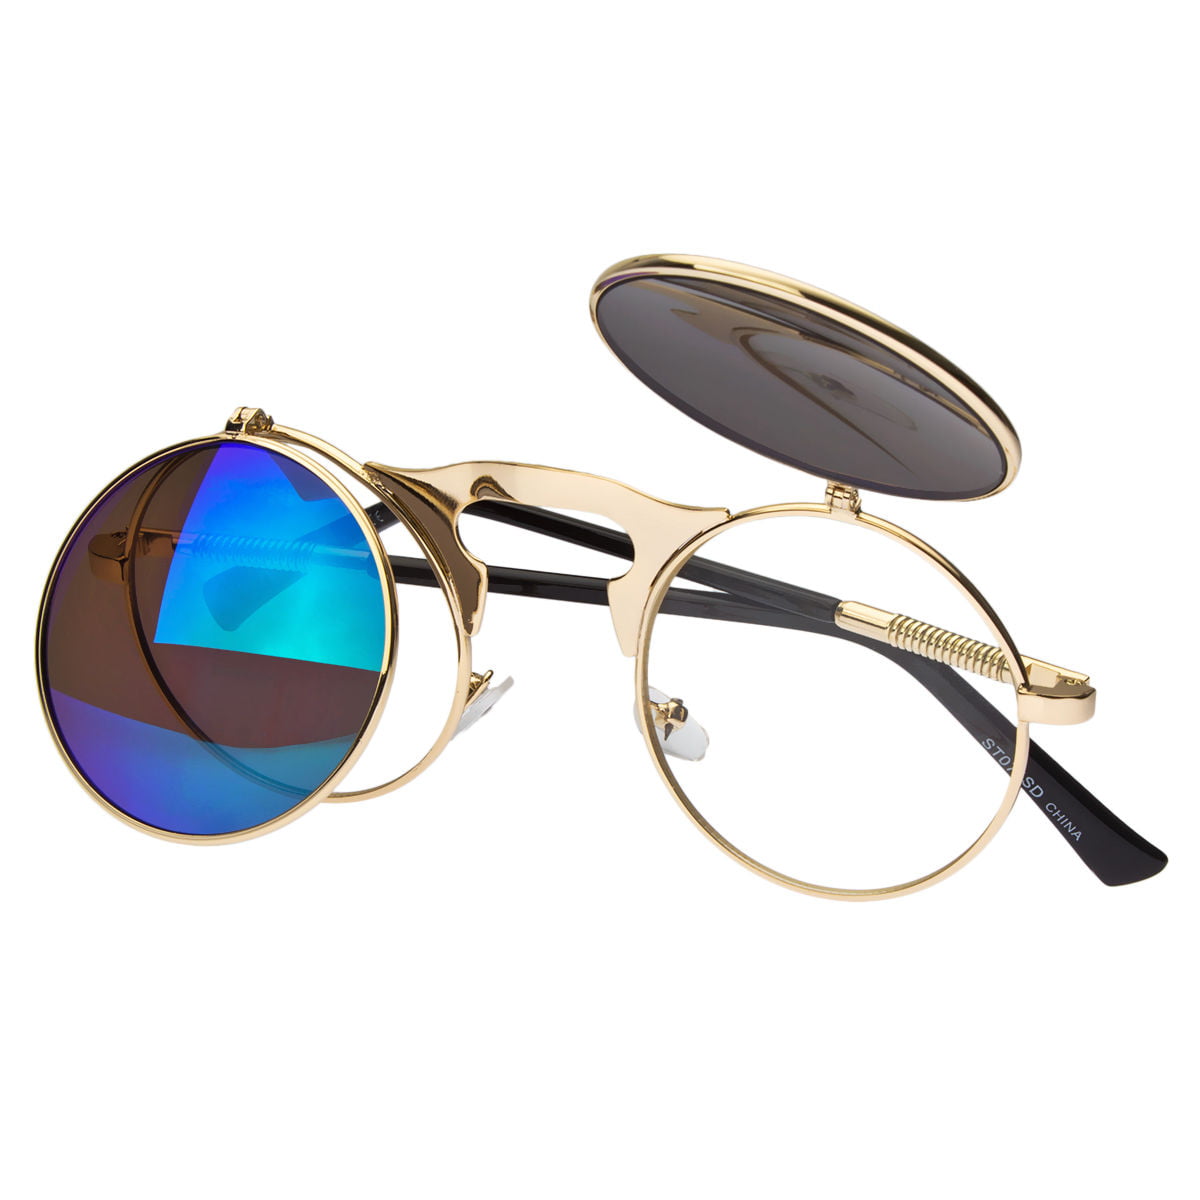 2 Pair Cool Flip Up Lens Steampunk Vintage Retro  Round Sunglasses Light Blue Us 